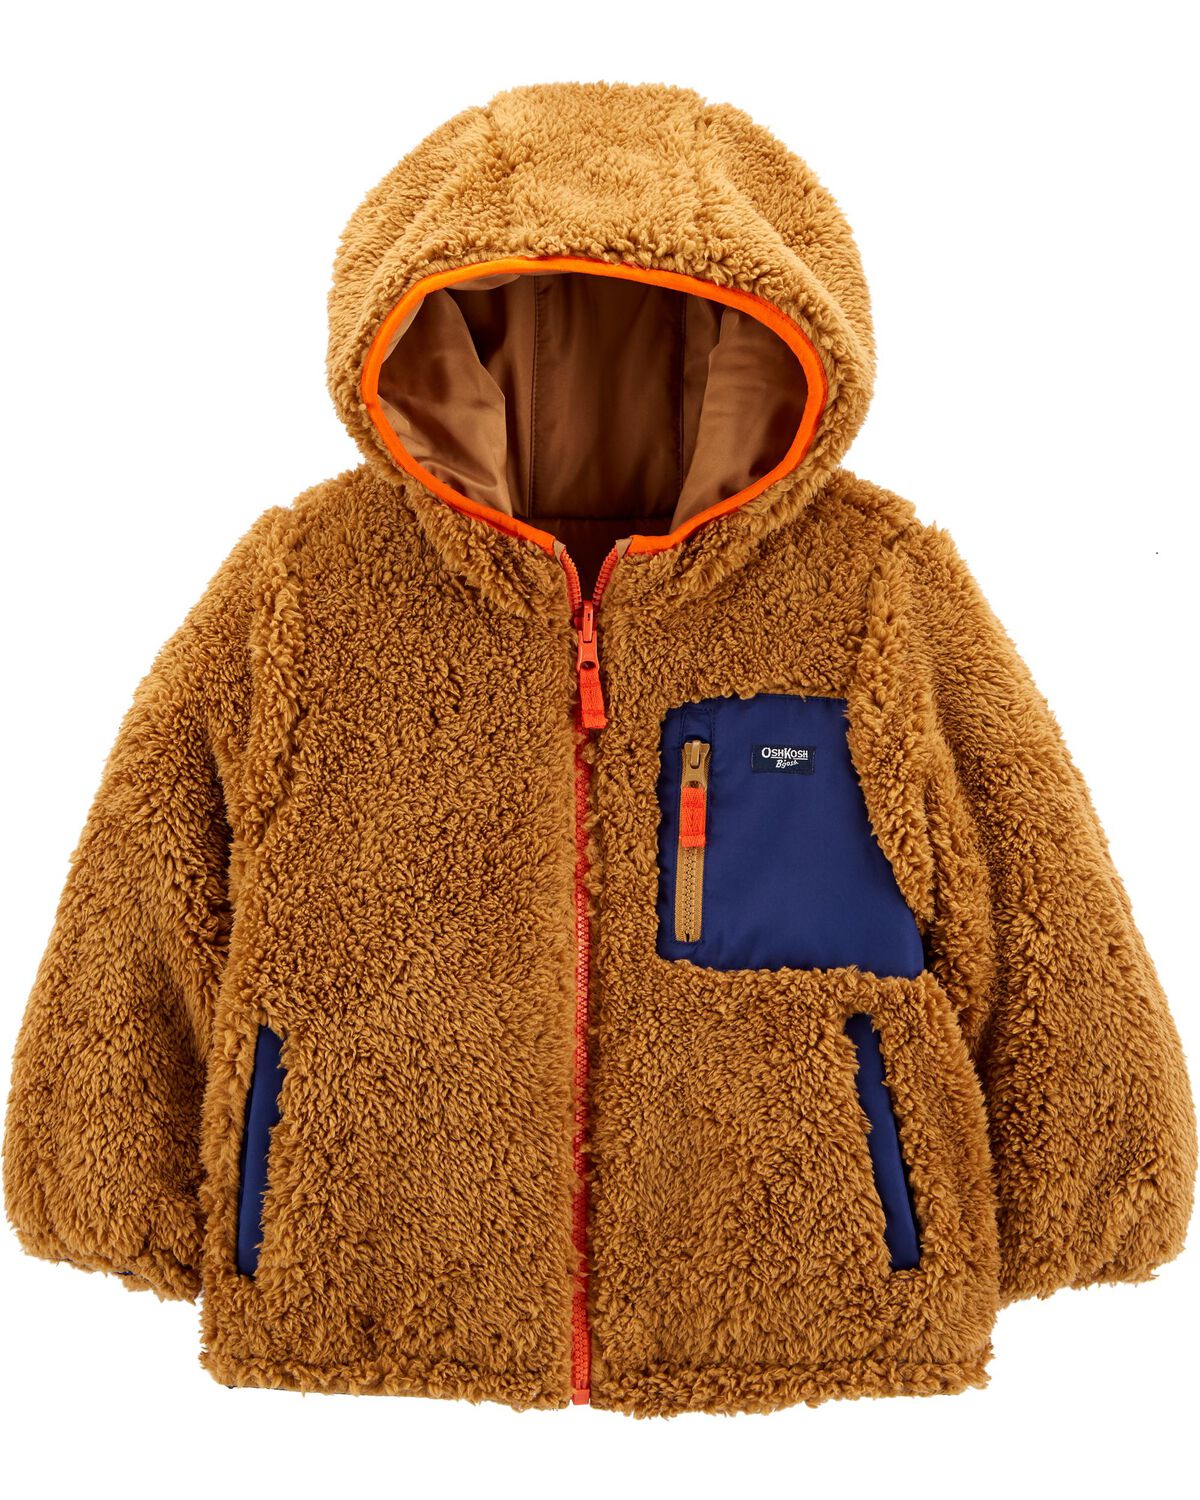 Navy, Camel Toddler Reversible Sherpa Jacket | oshkosh.com